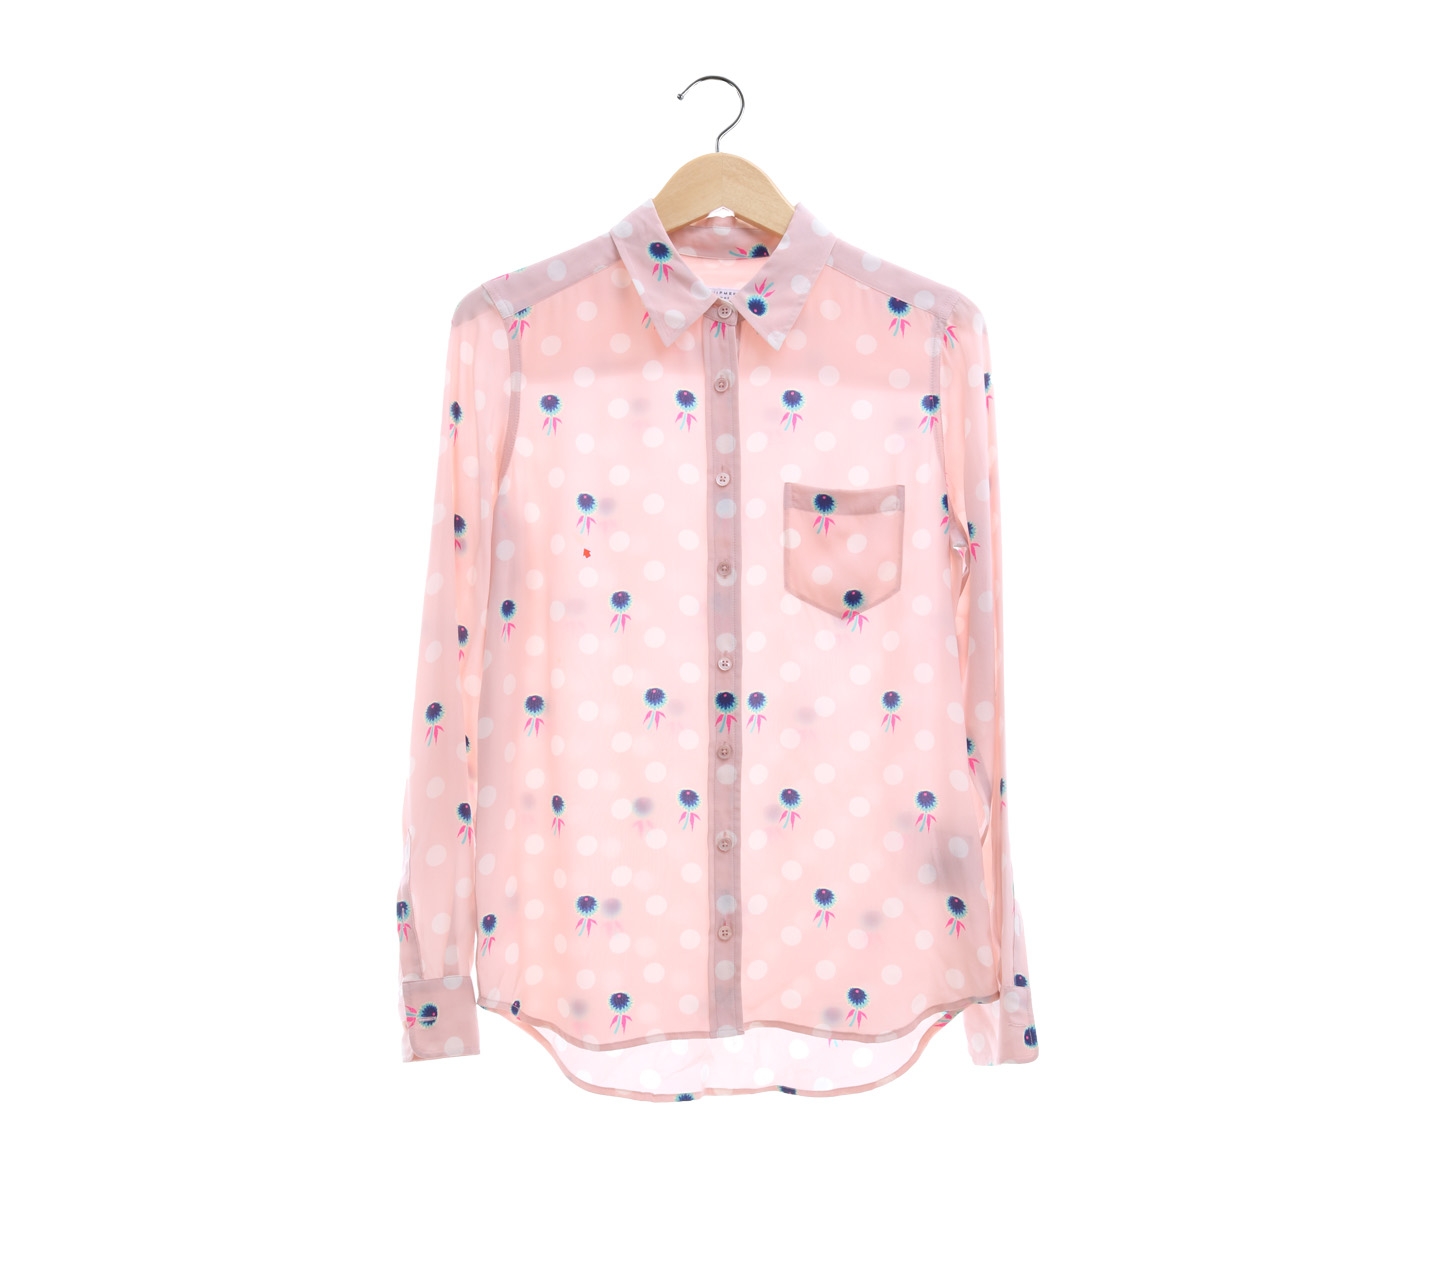 Equipment Femme Soft Pink Polkadot With Floral shirt